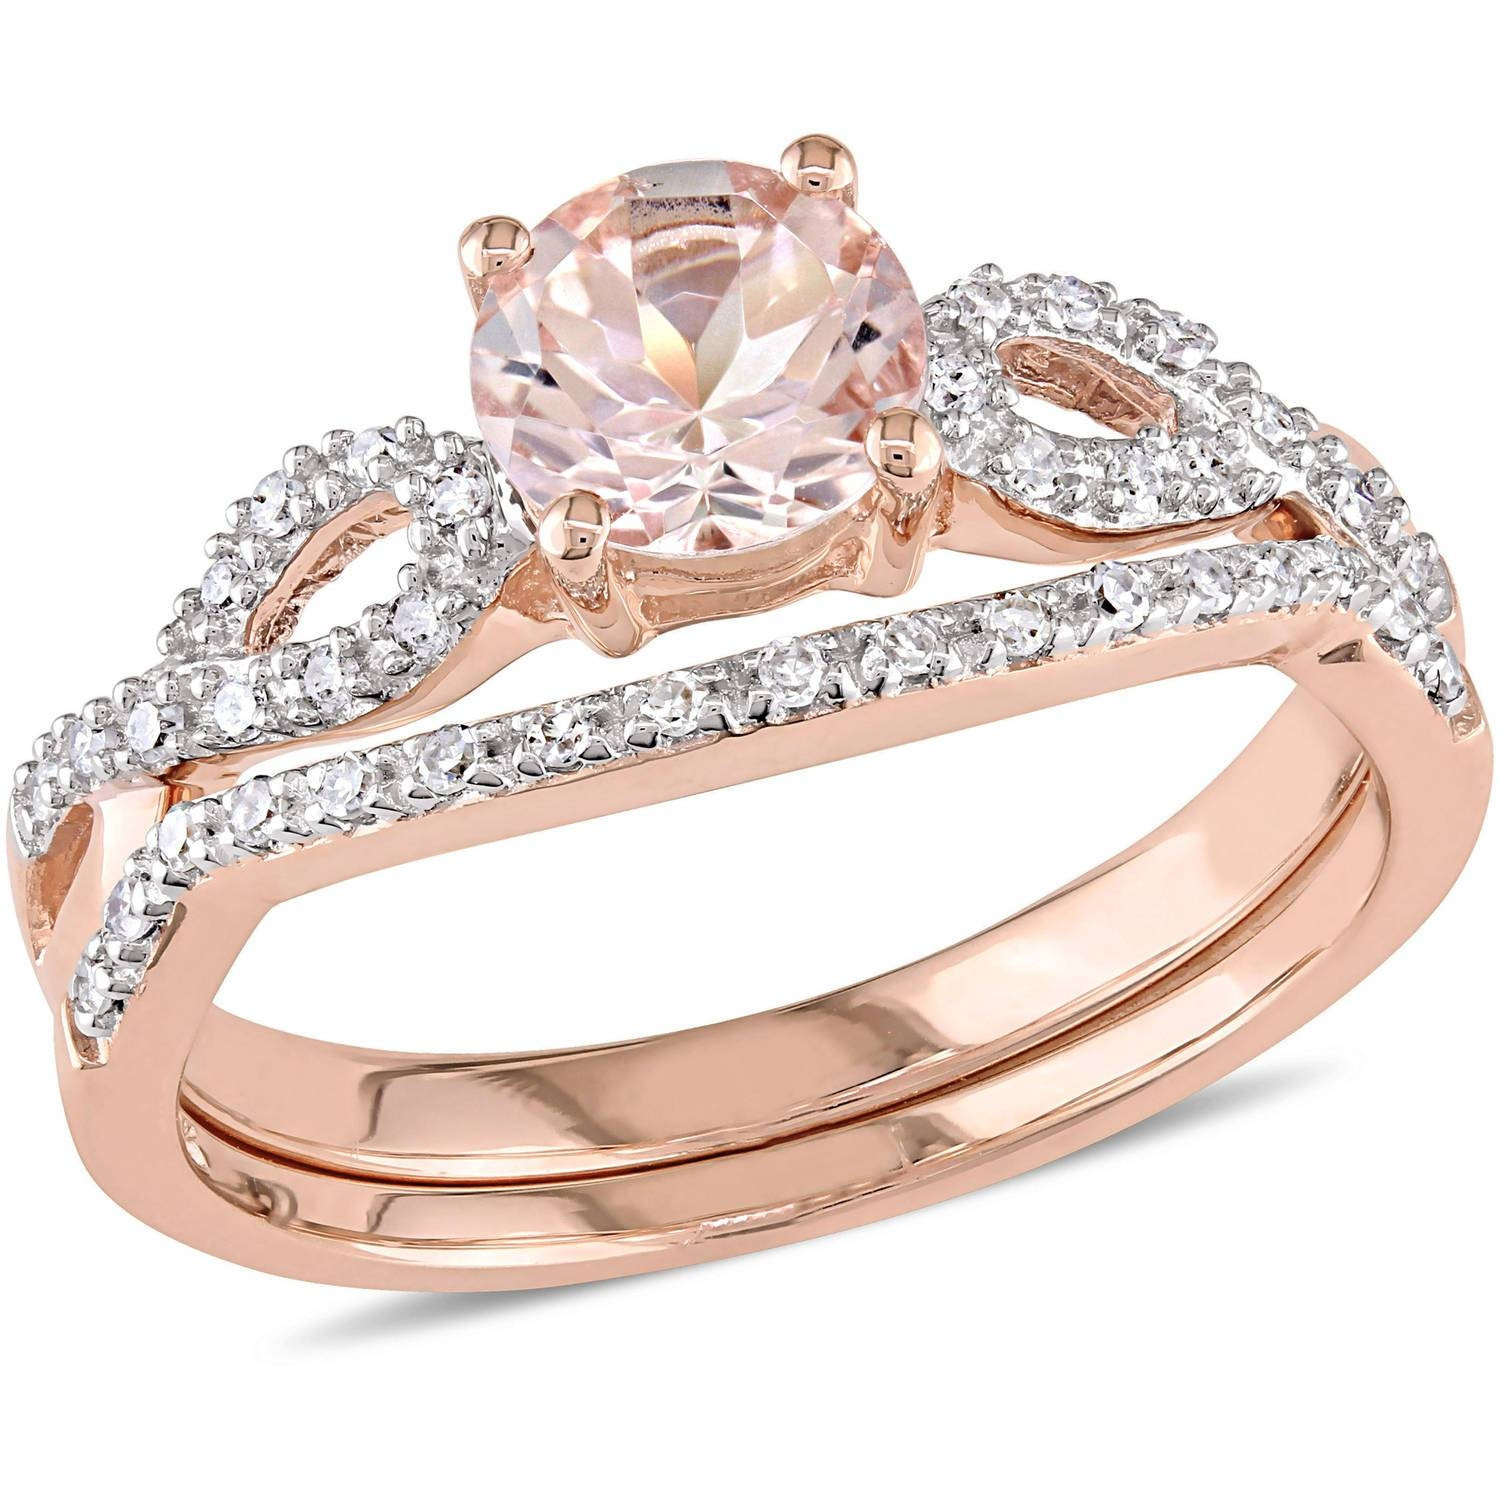 Walmart Diamond Wedding Rings
 15 Inspirations of Wedding Bands For Women Walmart